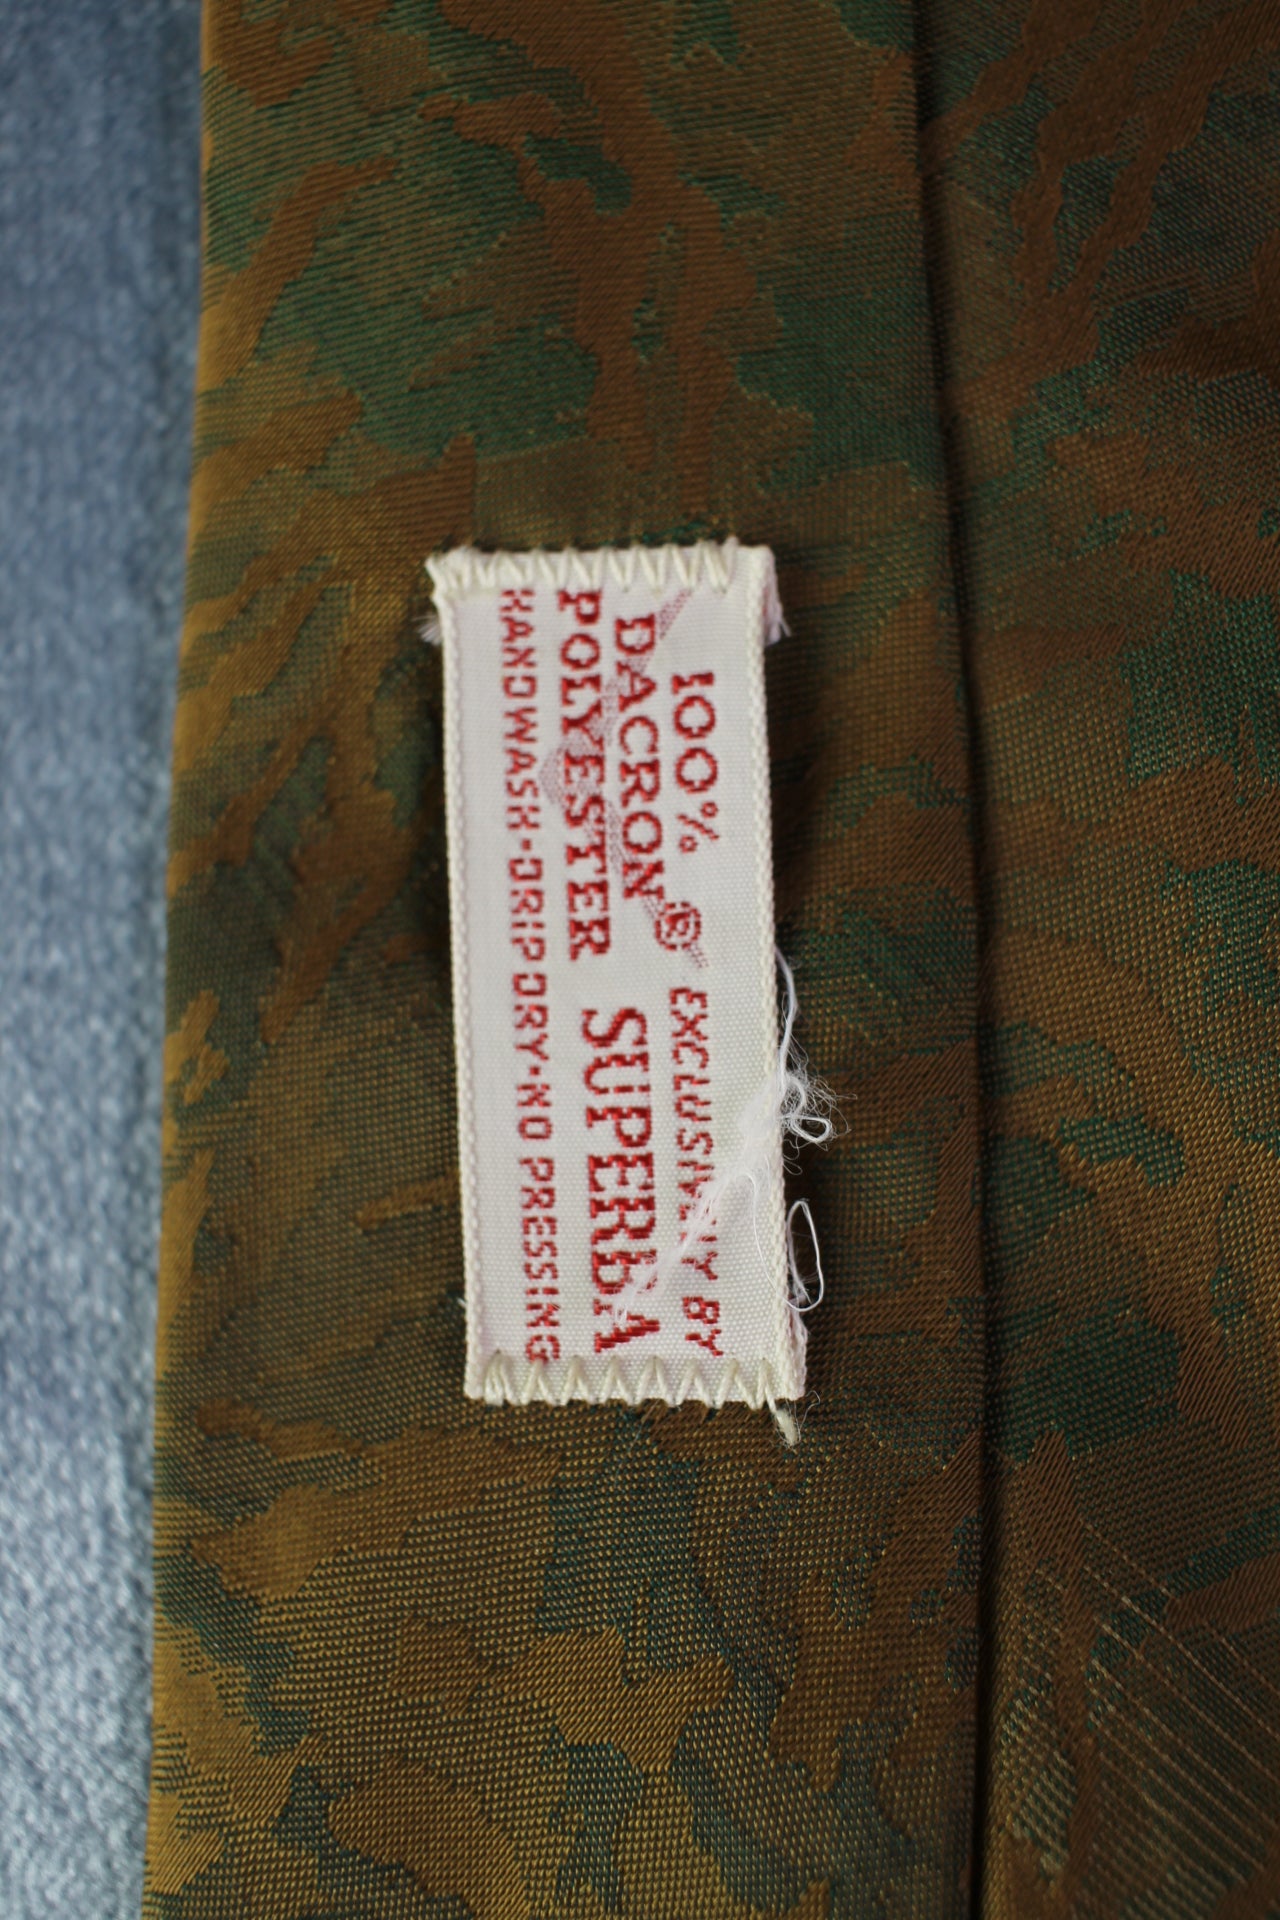 Vintage Superba 2 tone gold green pattern tie